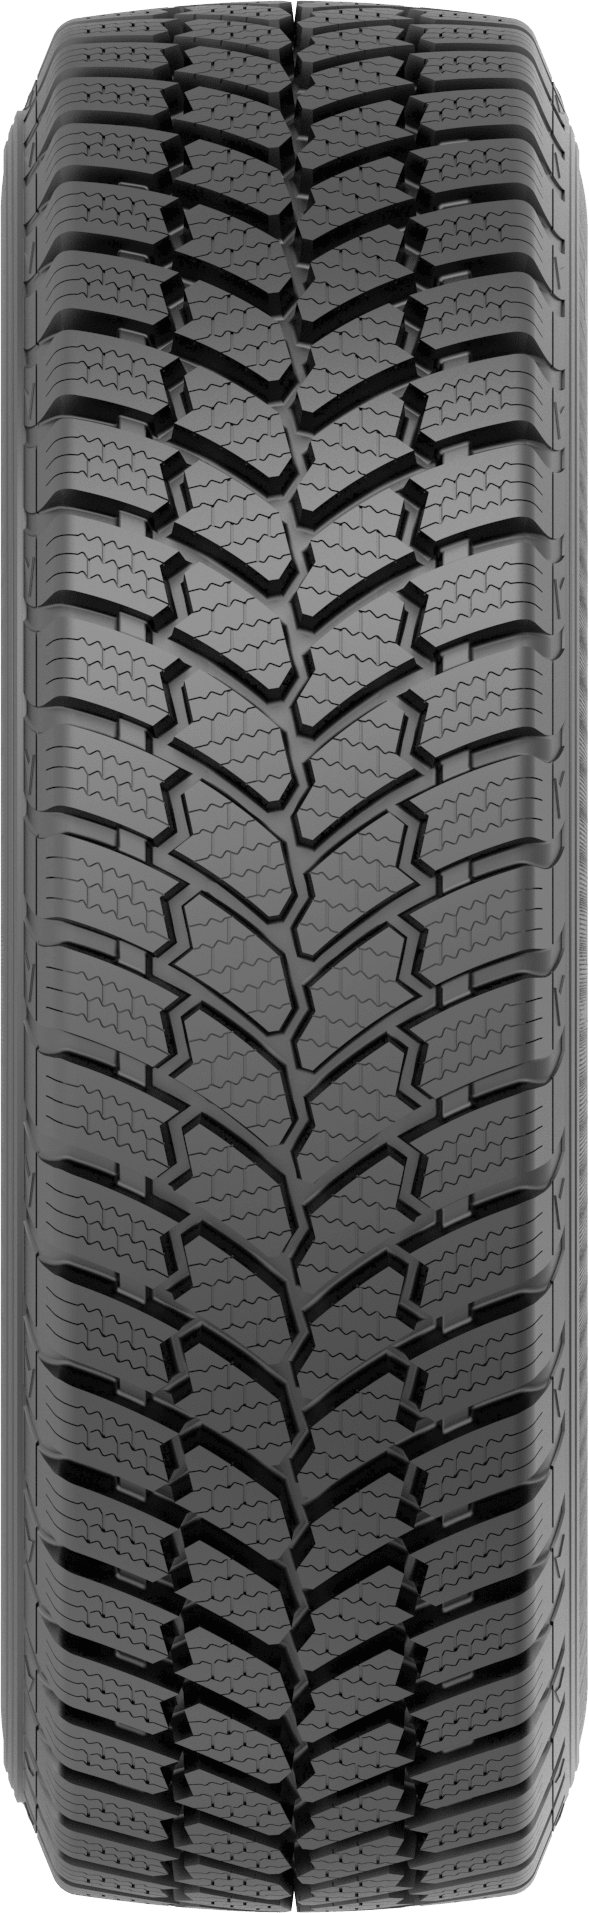 Buy | SimpleTire Blizzak Bridgestone Tires DM-V2 Online